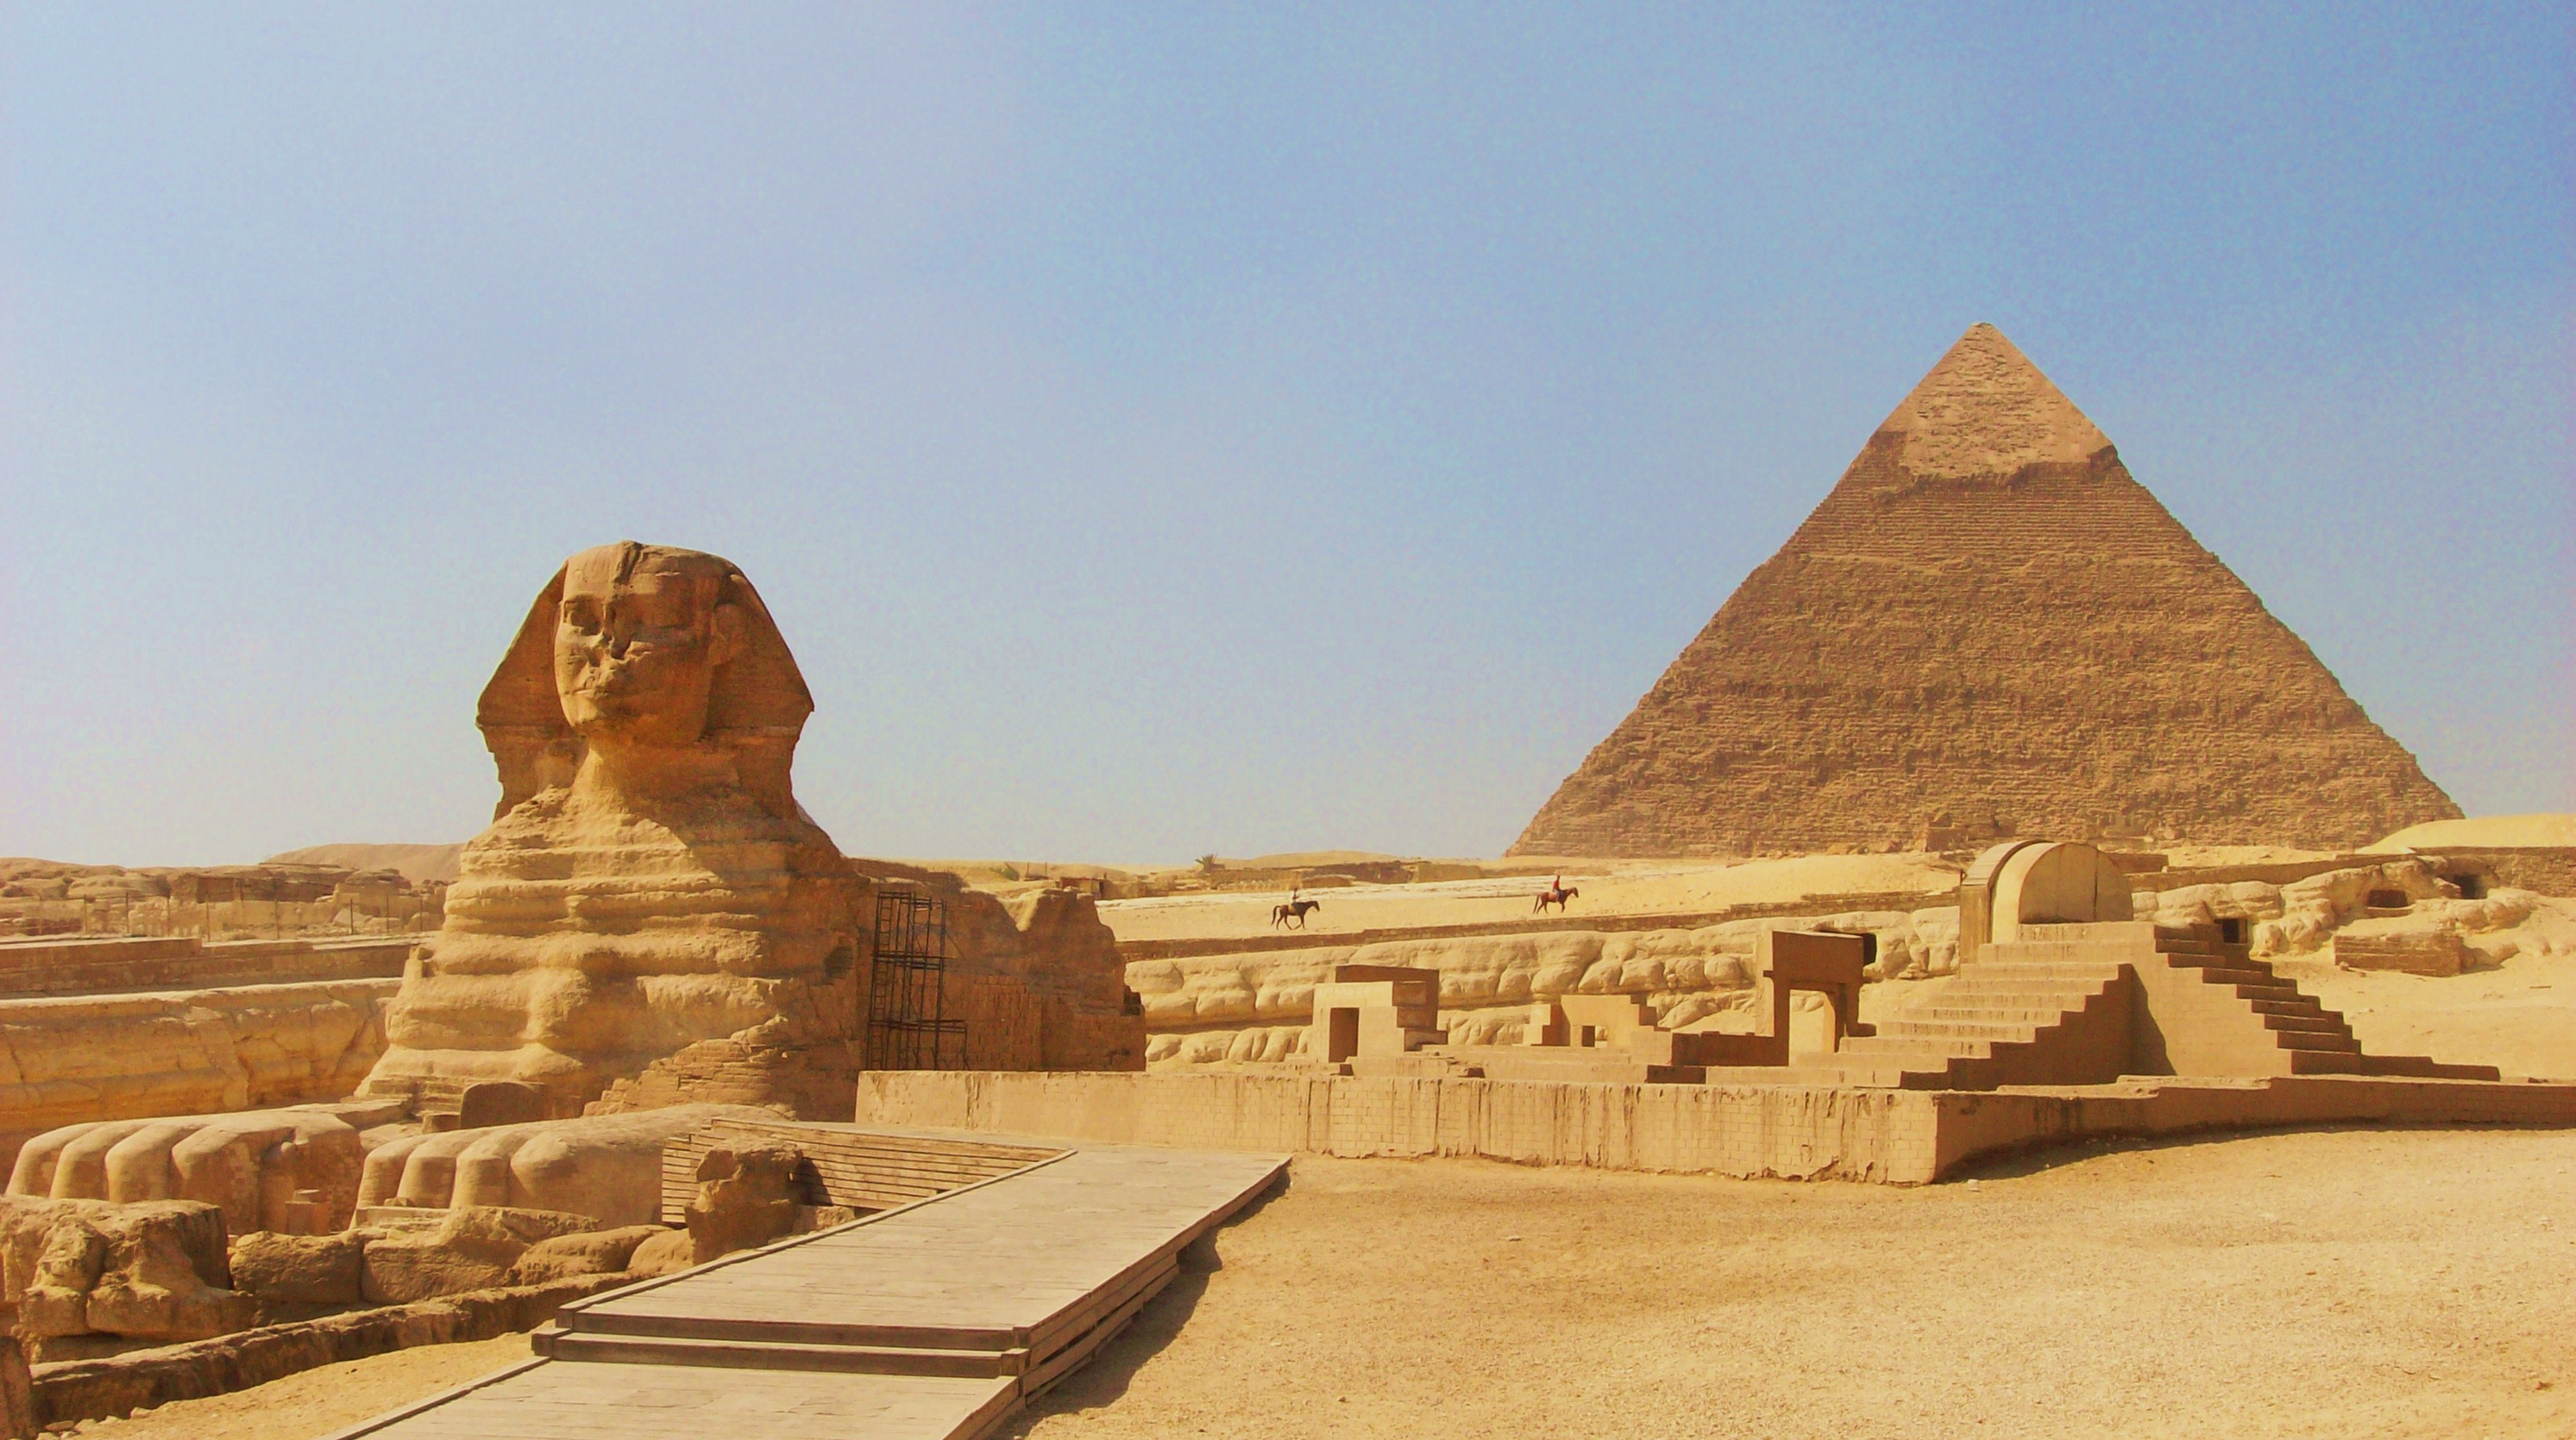 man made, pyramid of khafre, pyramid, sphinx